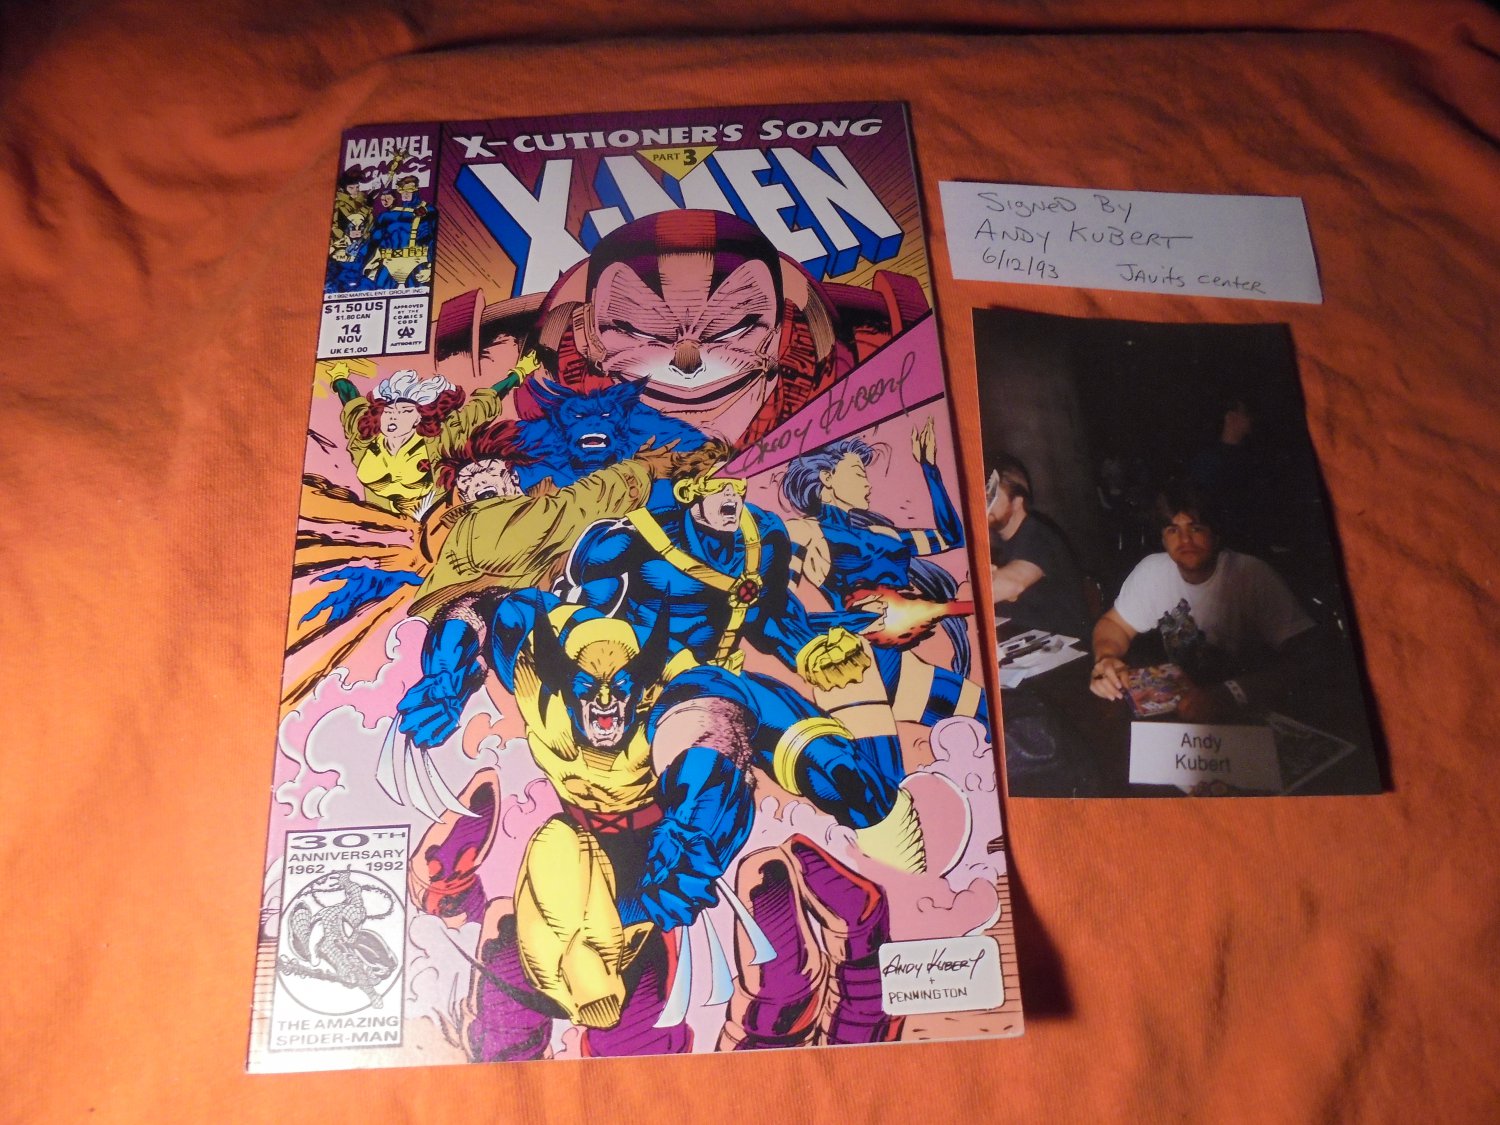 X-MEN (Vol.2) # 14 * Nov. 1992 * AUTOGRAPHED by Andy Kubert * $25.00